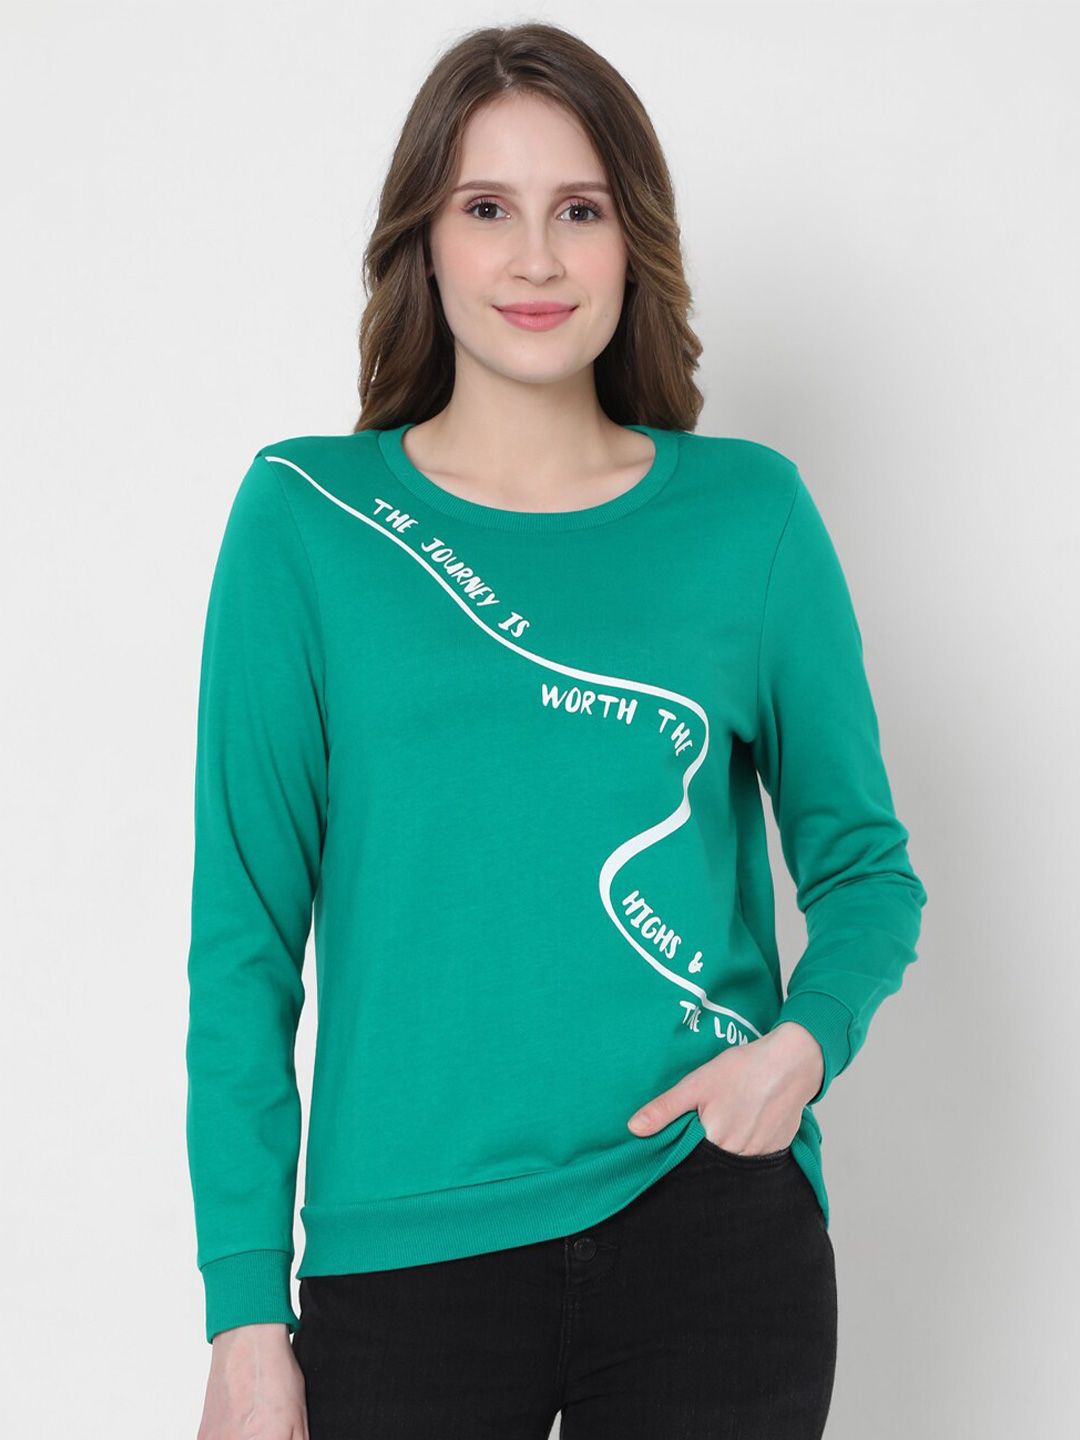 Vero Moda Women Green Printed Cotton Sweatshirt Price in India